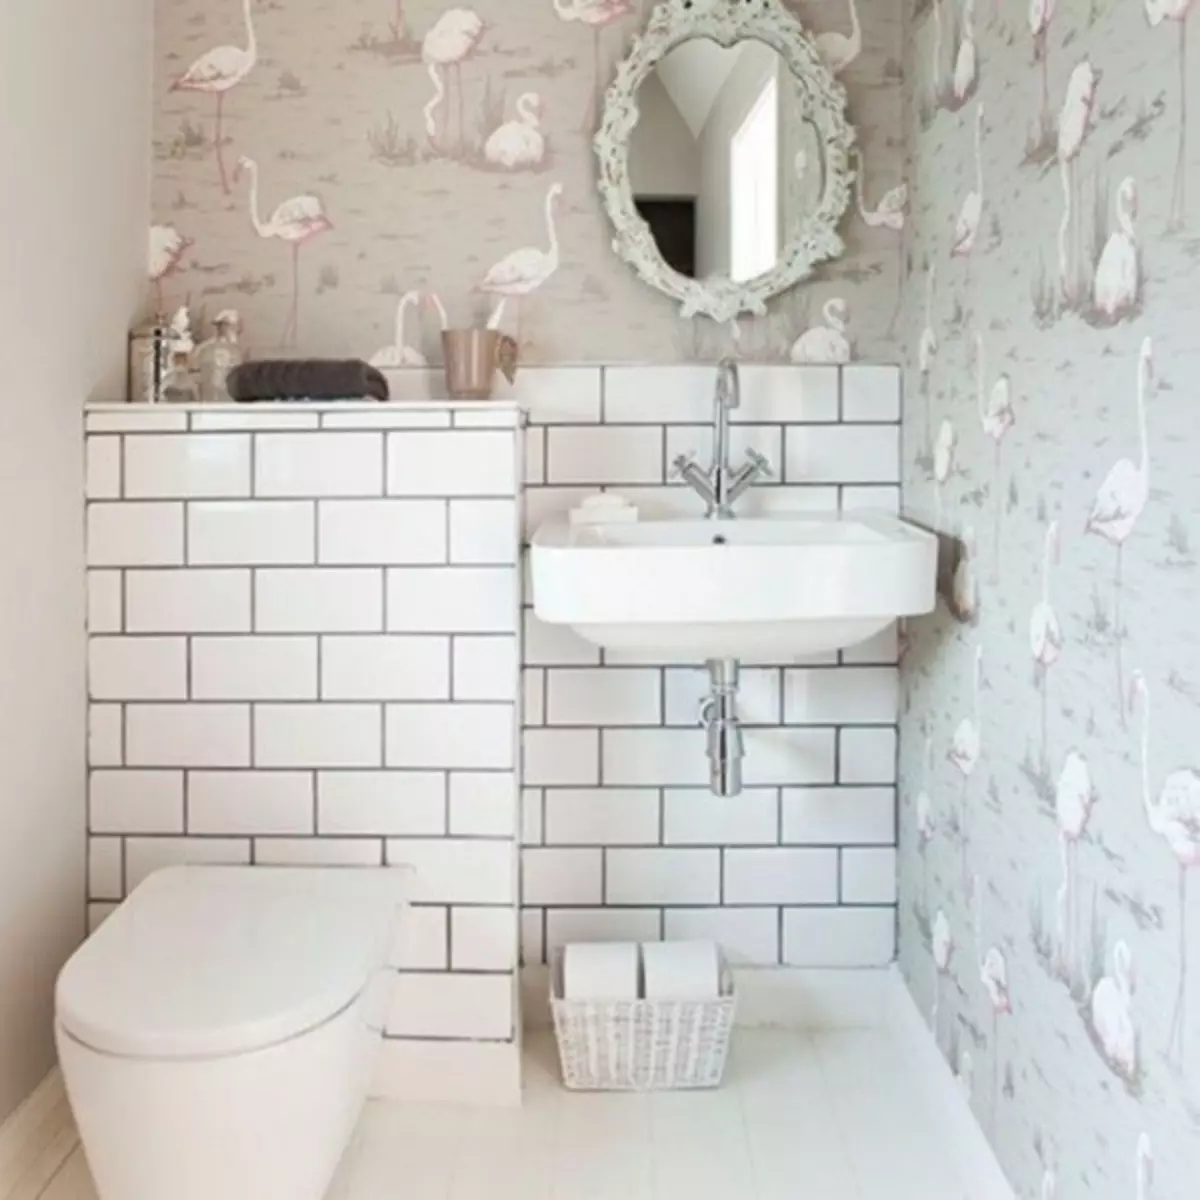 Desain toilet wallpaper